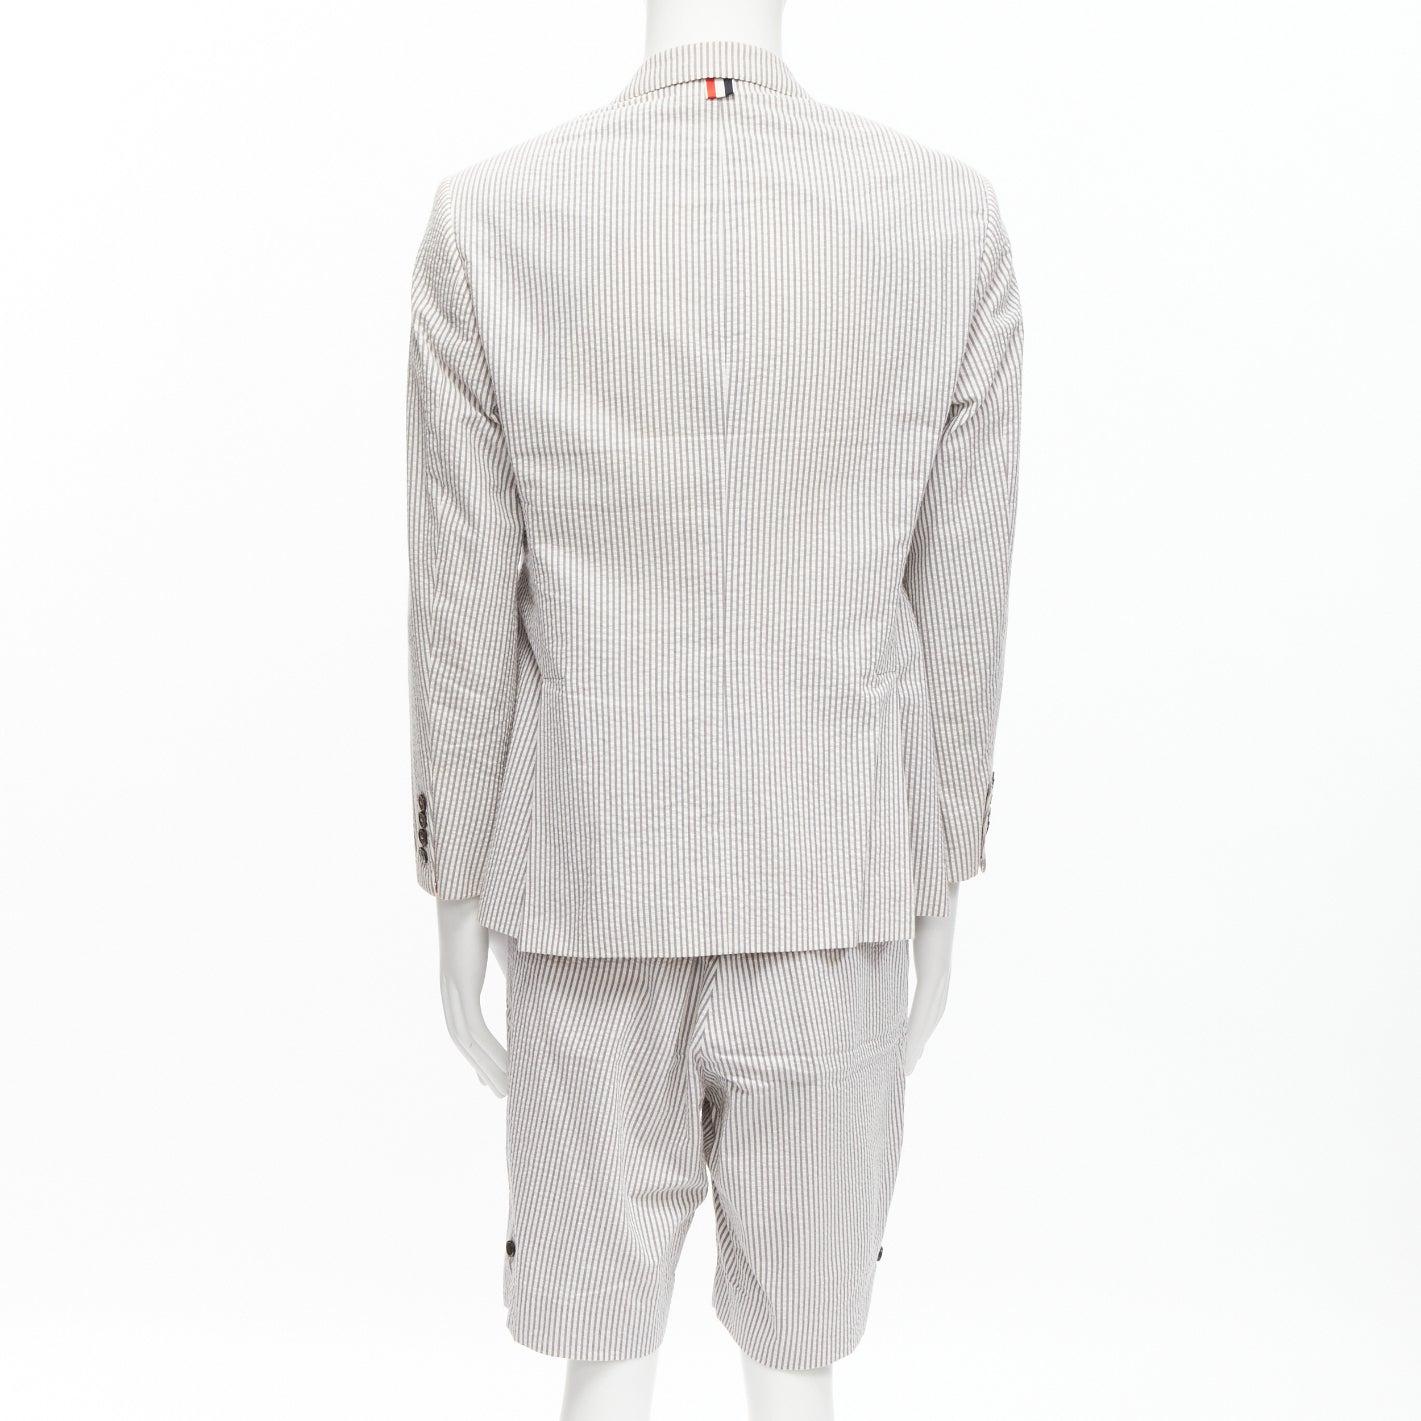 THOM BROWNE grey white striped seersucker blazer jacket shorts suit Sz. 3 L For Sale 1